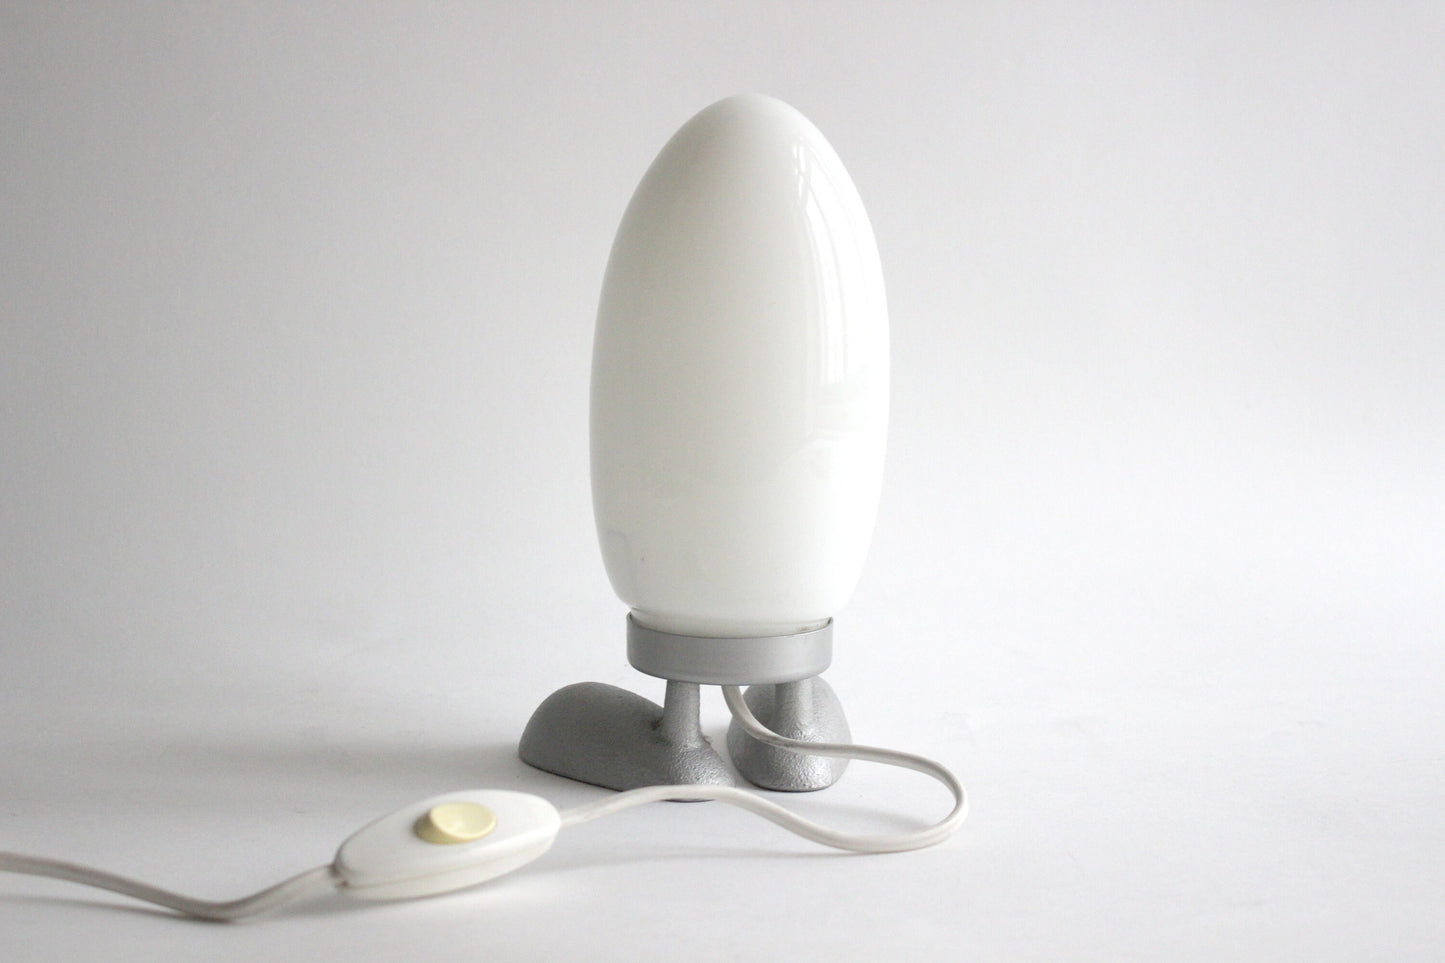 IKEA 90s Egg Fjorton lamp by Tatsuo Konno - Minimalistic style, postmodern style.